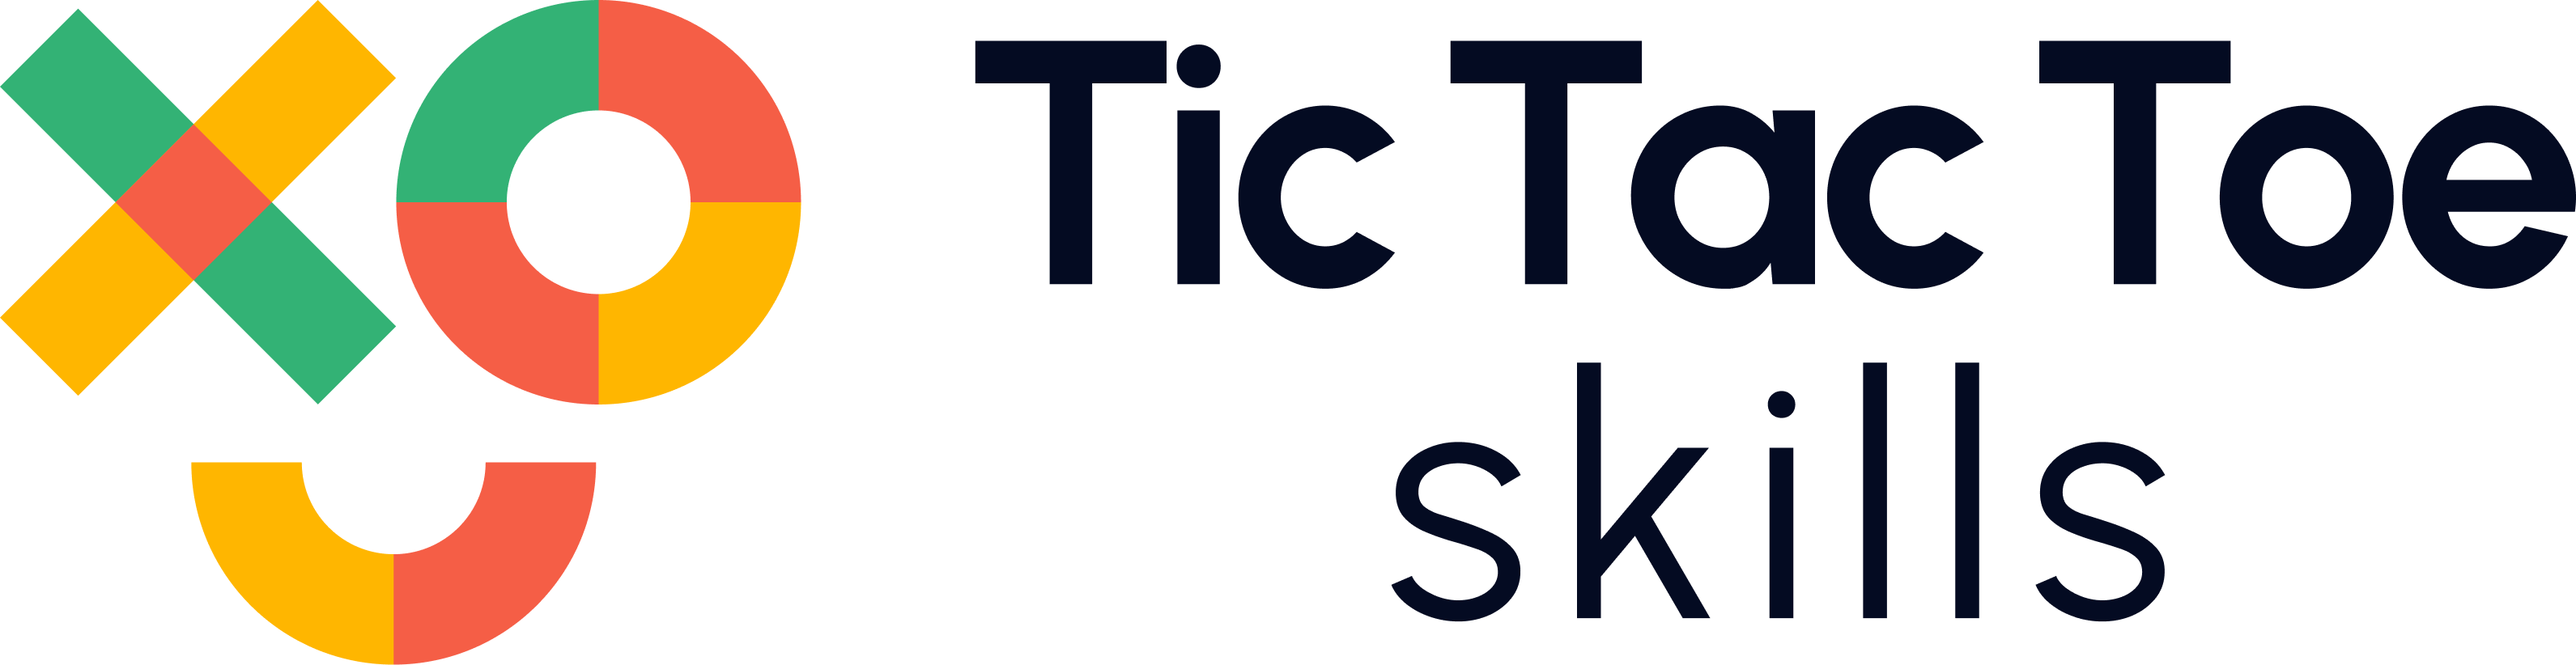 Tic Tac Toe Logo